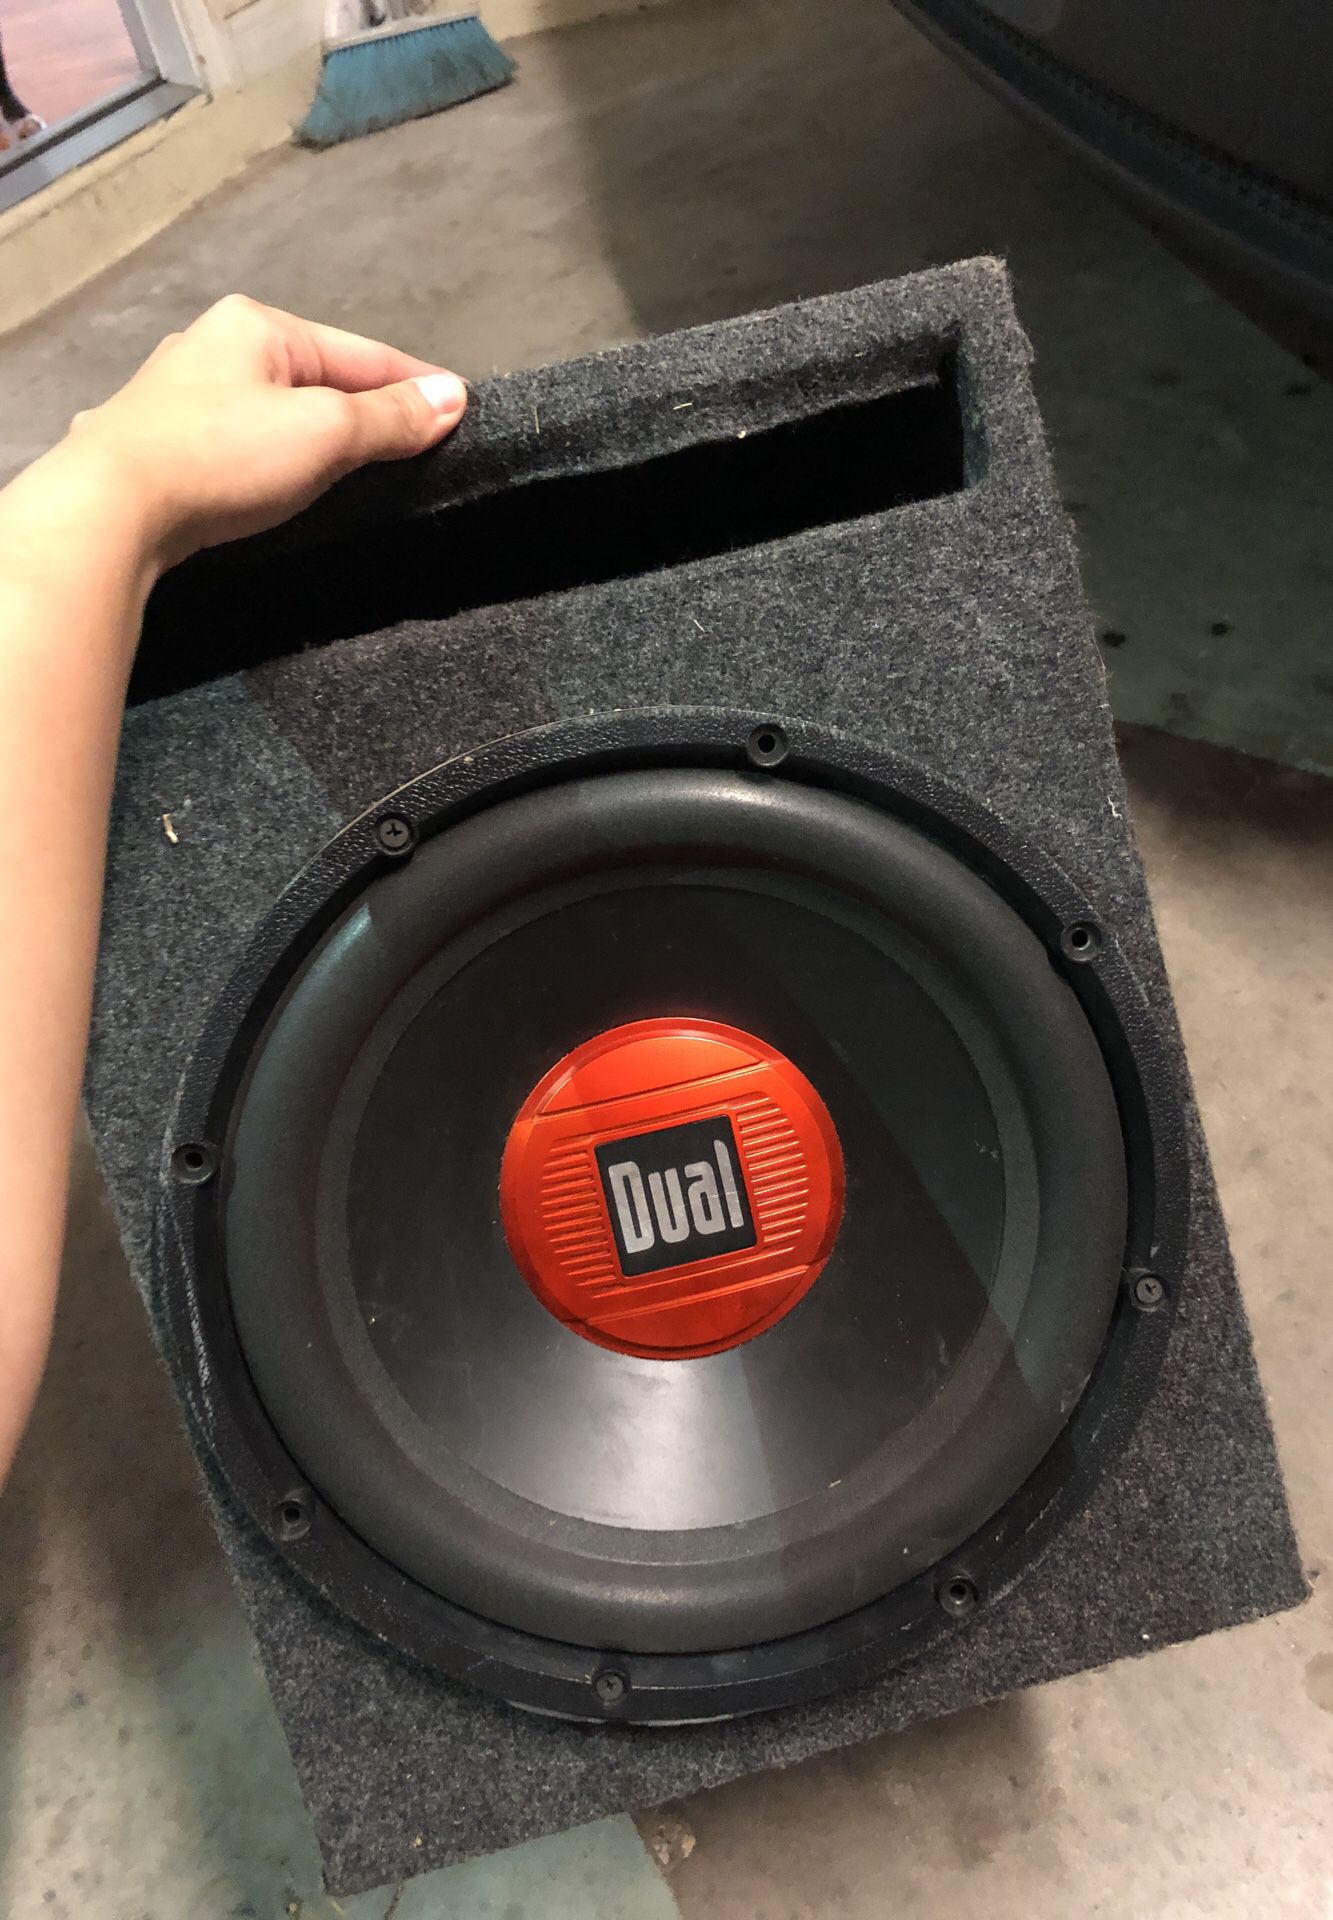 Speaker for car or home audio